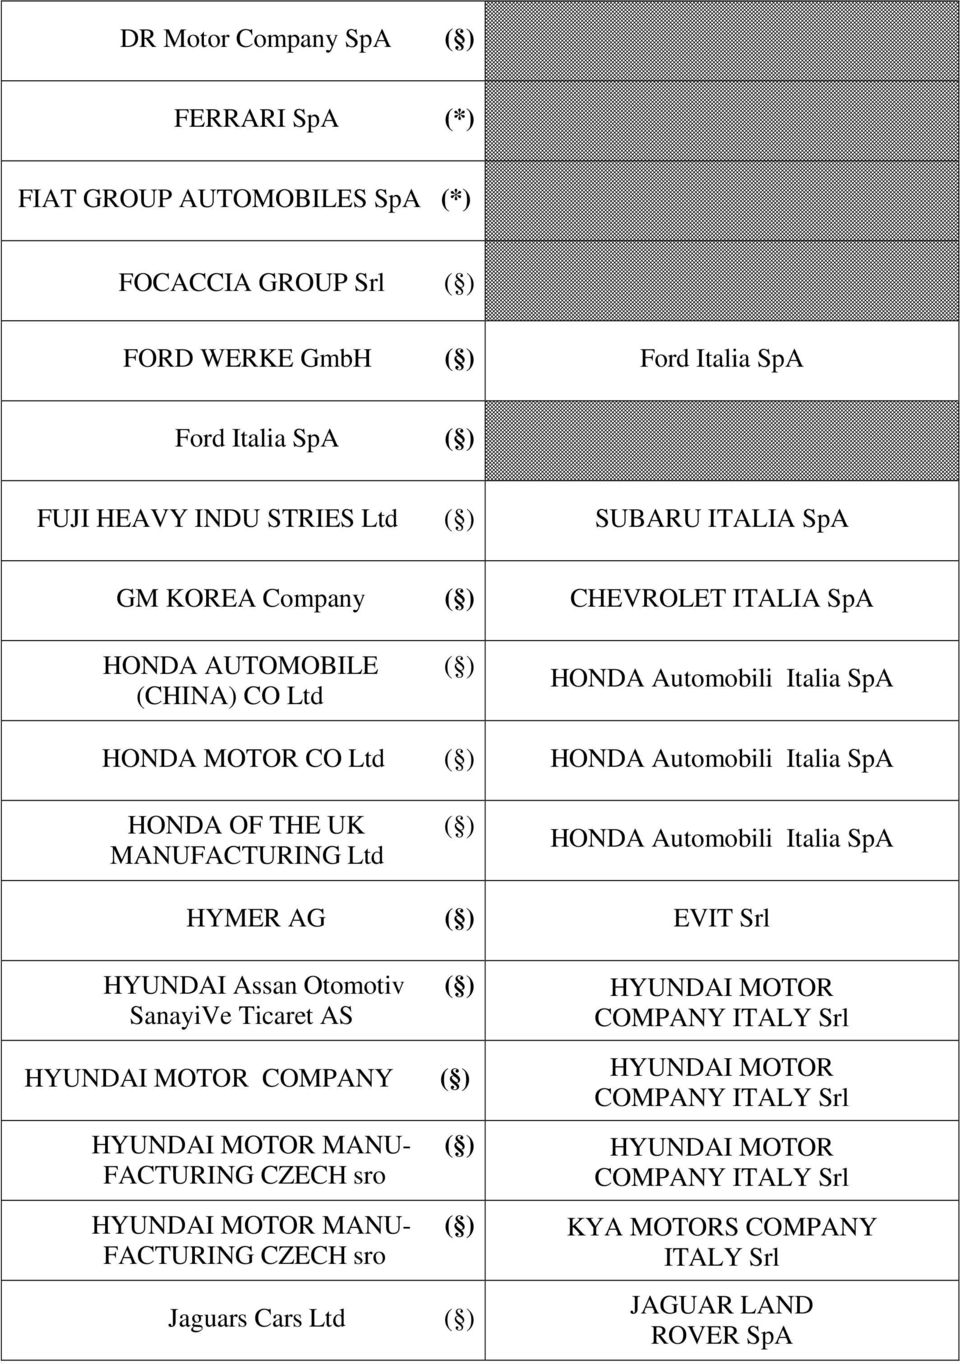 ( ) HONDA Automobili Italia SpA HONDA OF THE UK ( ) MANUFACTURING Ltd HONDA Automobili Italia SpA HYMER AG ( ) EVIT Srl HYUNDAI Assan Otomotiv ( ) SanayiVe